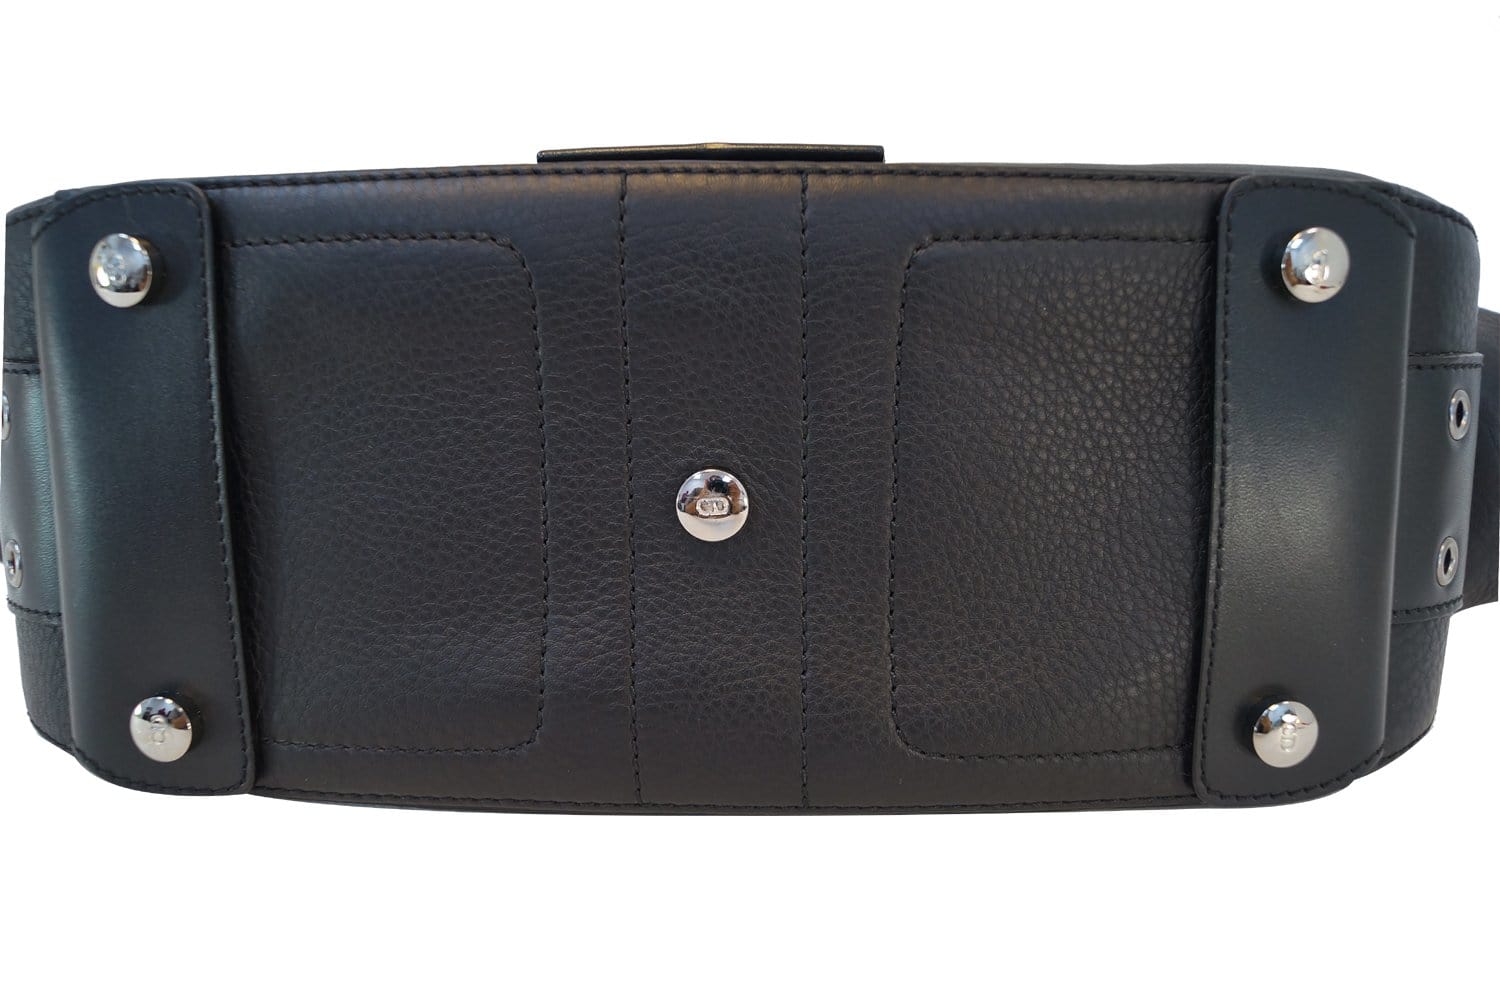 Christian Dior Leather Street Chic Columbus Ave Shoulder Bag w/ Tags -  Black Shoulder Bags, Handbags - CHR63238